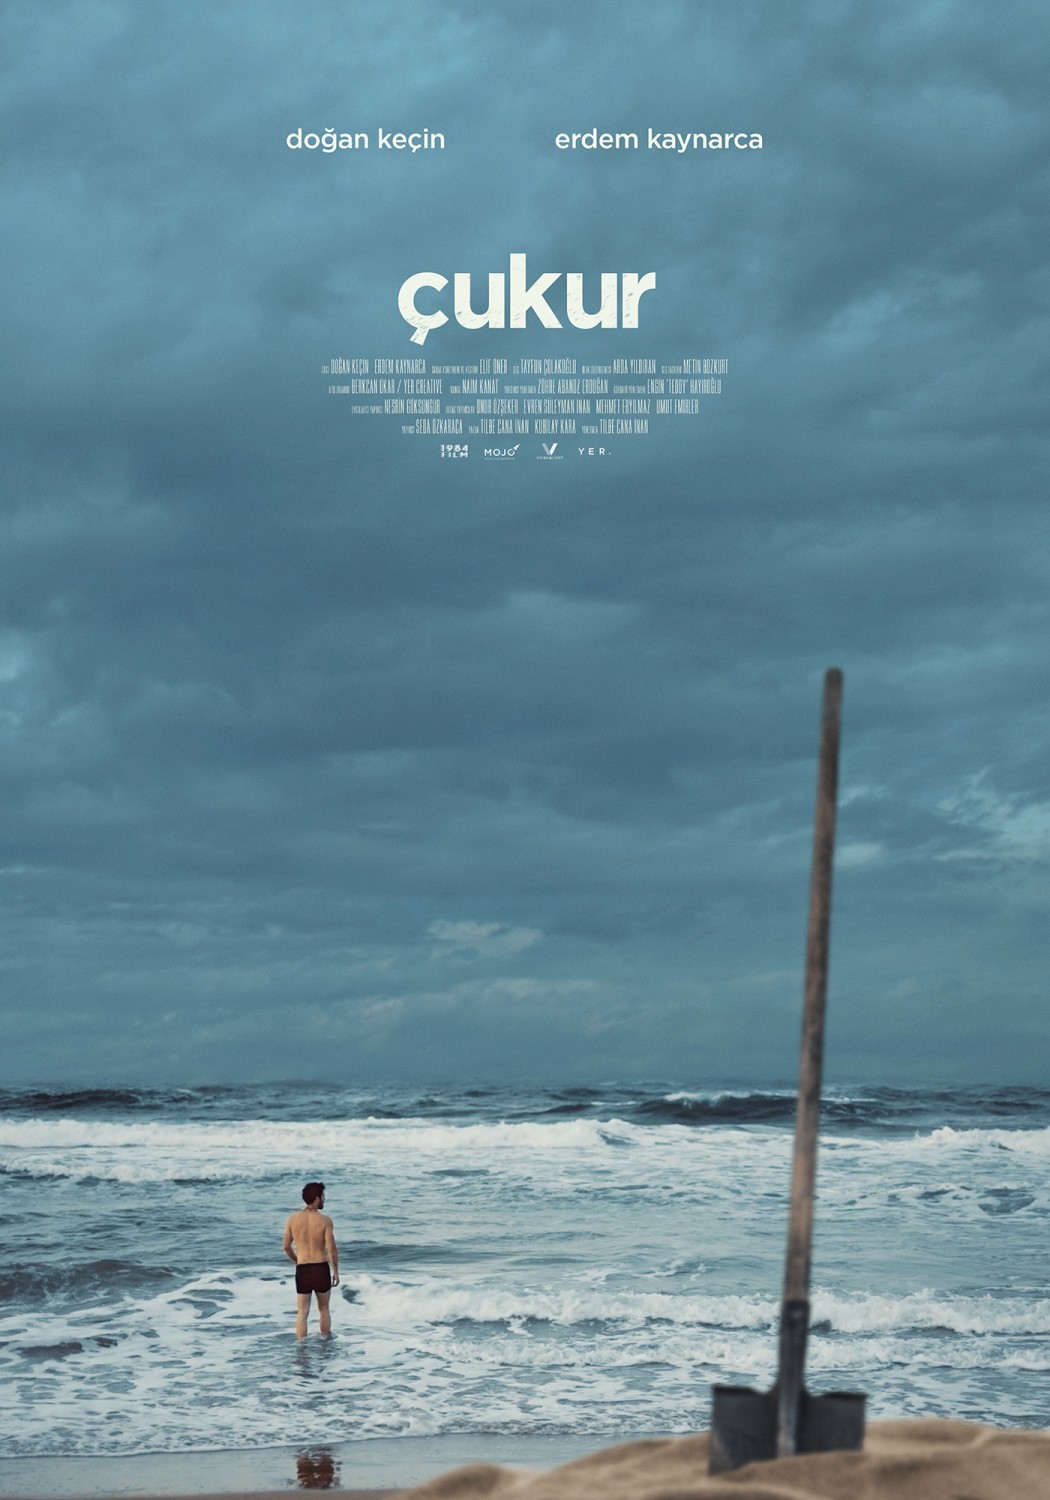 Extra Large Movie Poster Image for ukur